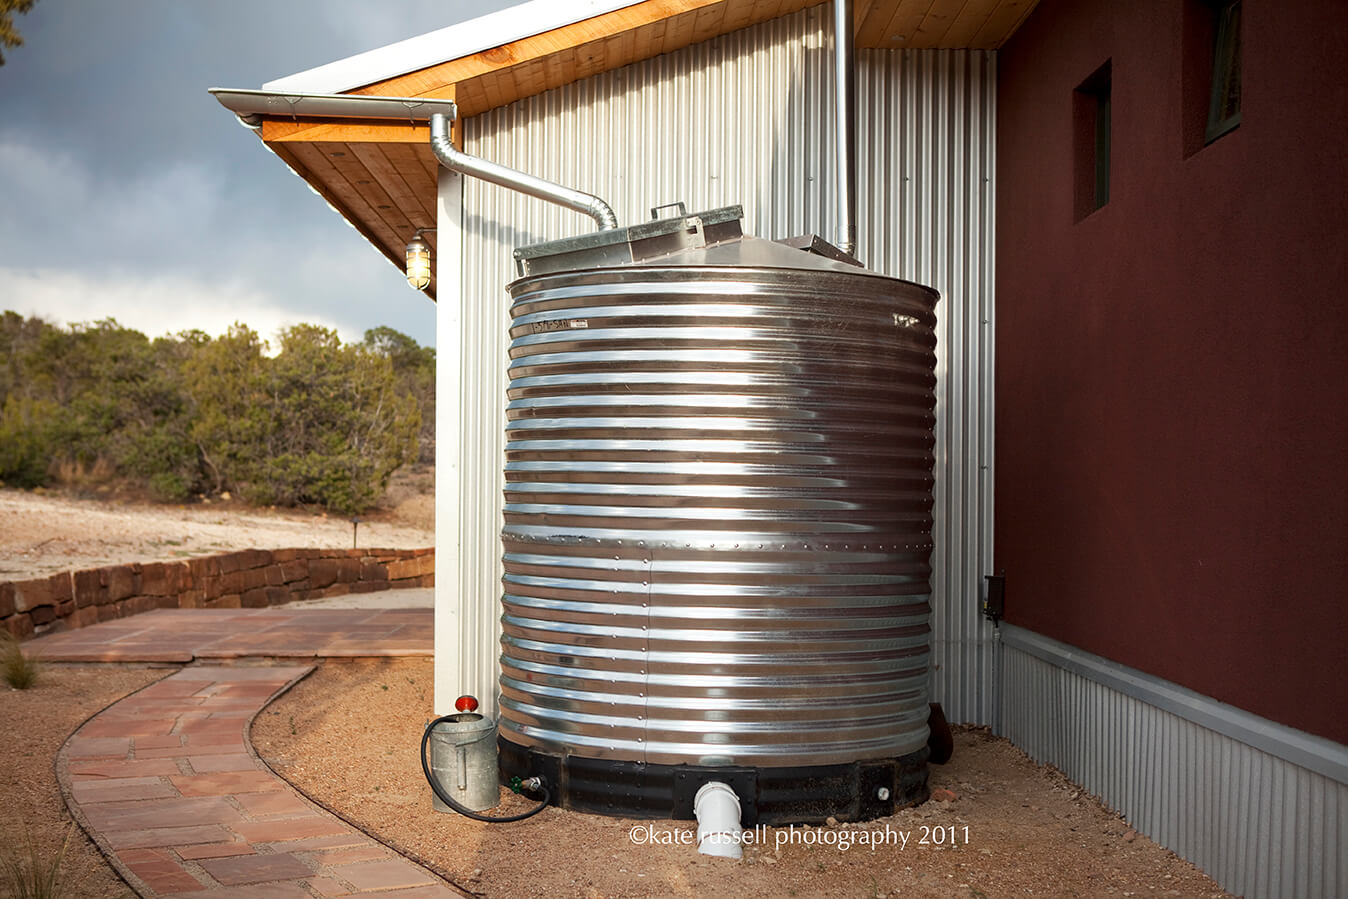 A metal water tank sits outside of a Santa Fe house.